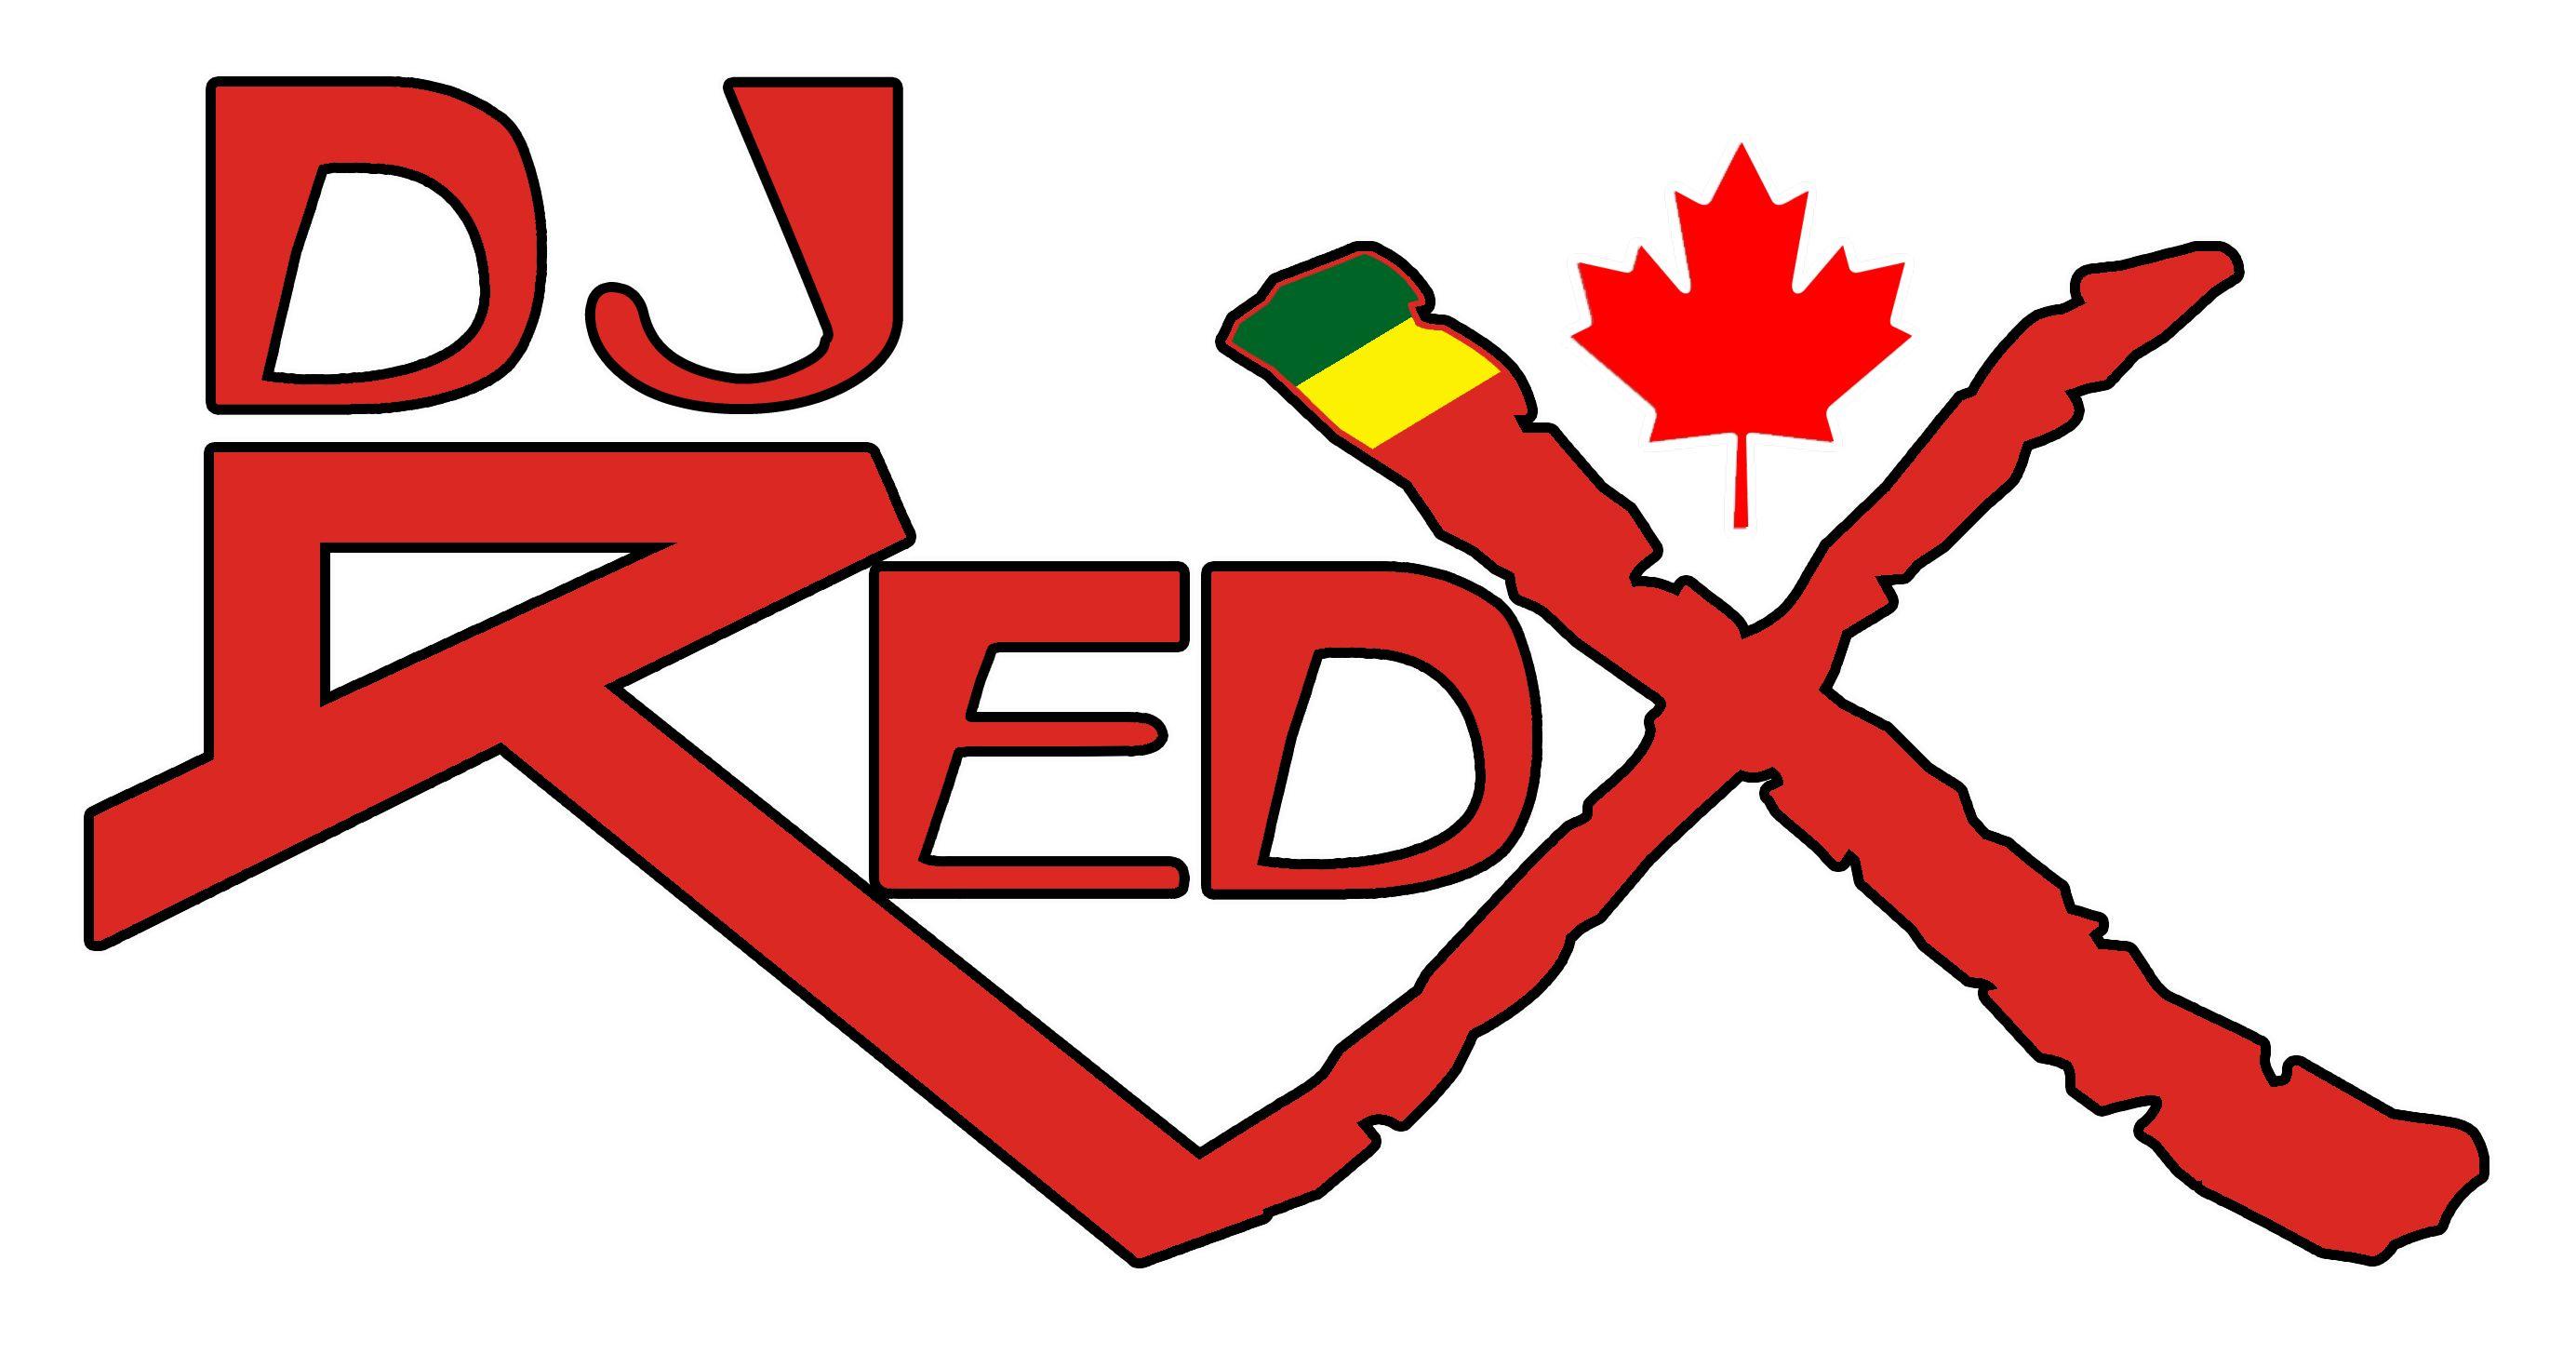 Red X Logo - DJ Red X Musical Mash Up